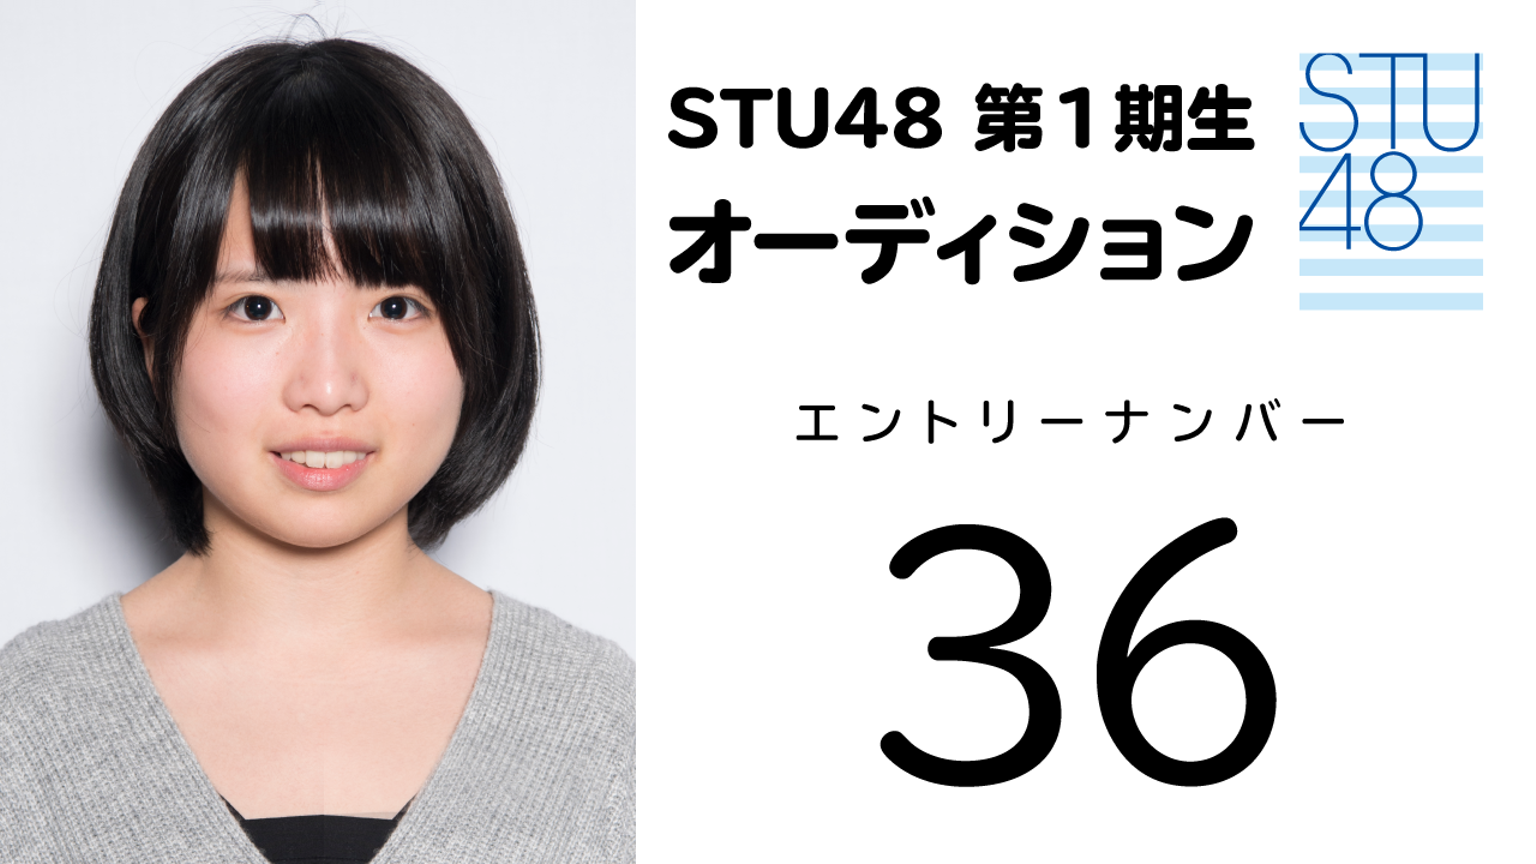 STU48 第1期受験生 エントリーナンバー36番